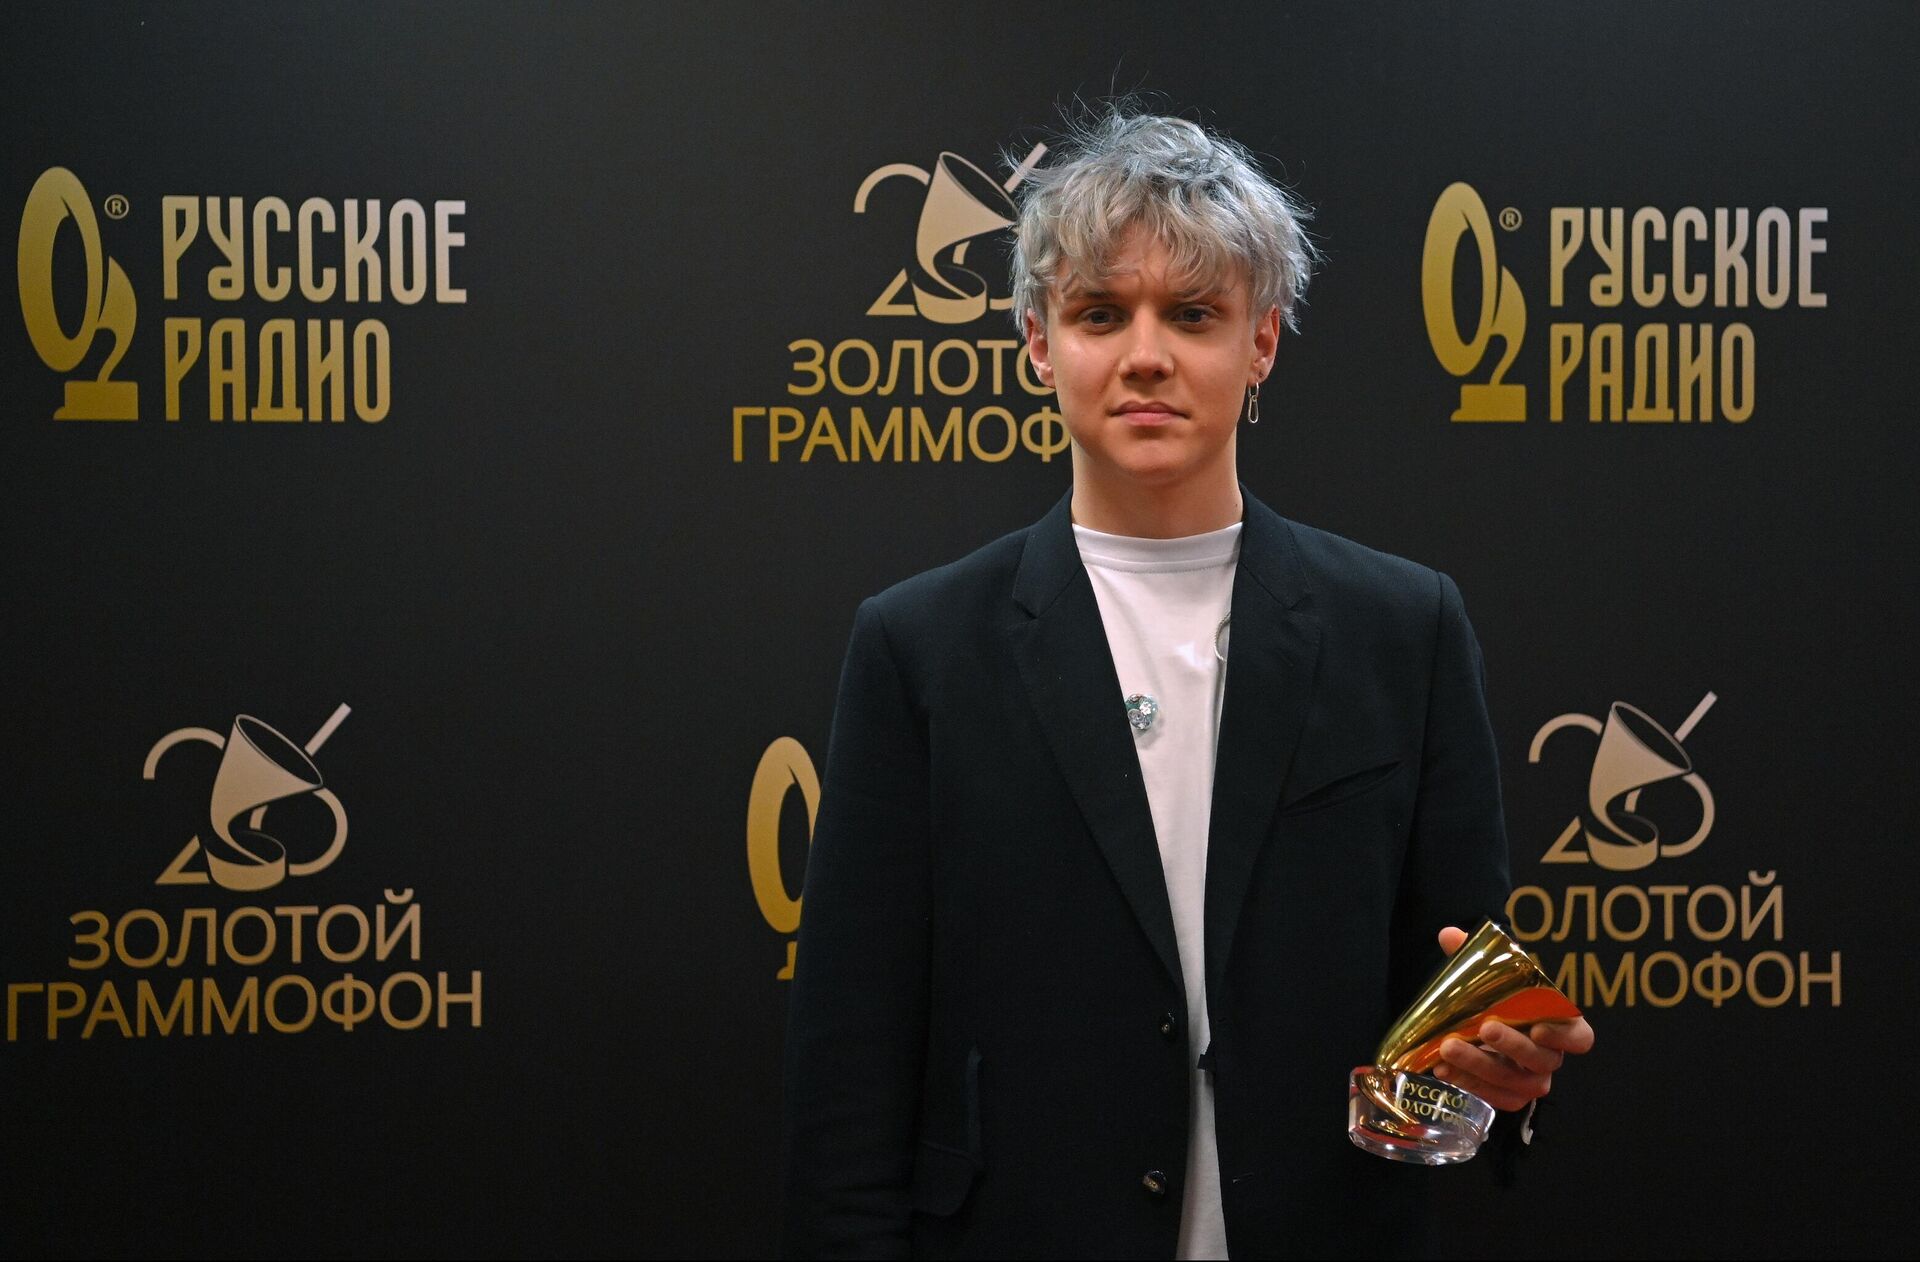 Ваня Дмитриенко золотой граммофон 2021